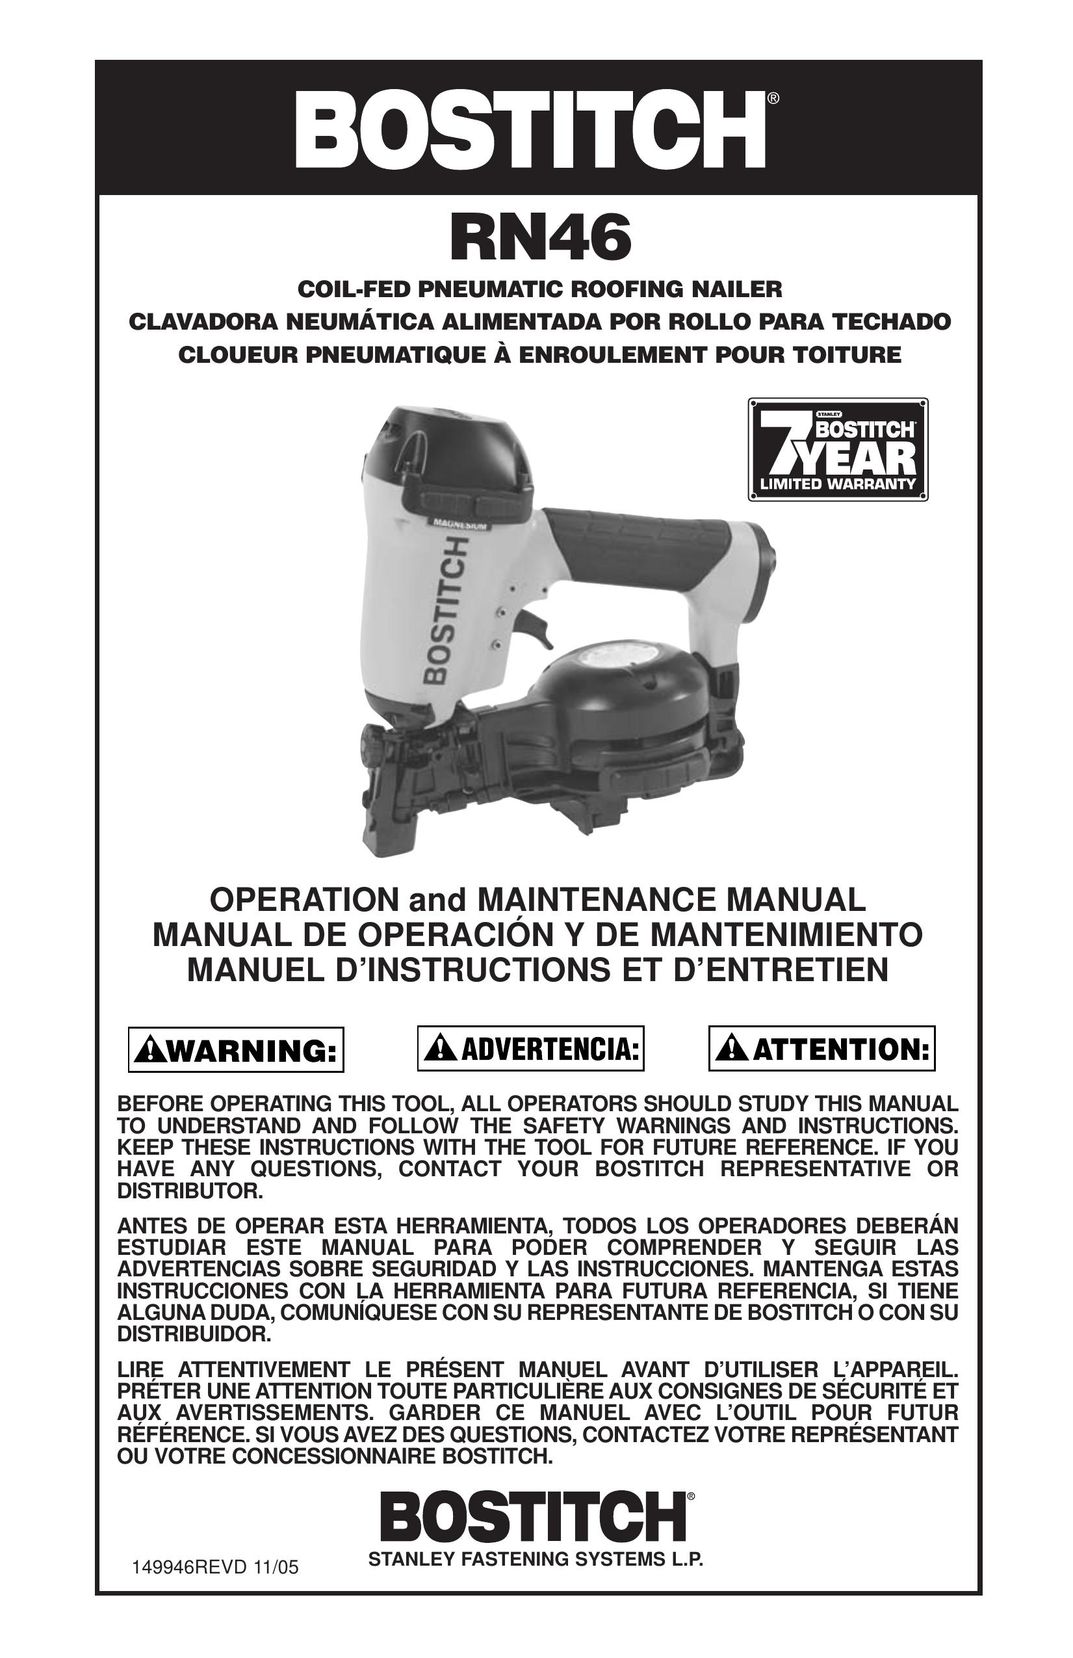 Bostitch RN46 Nail Gun User Manual